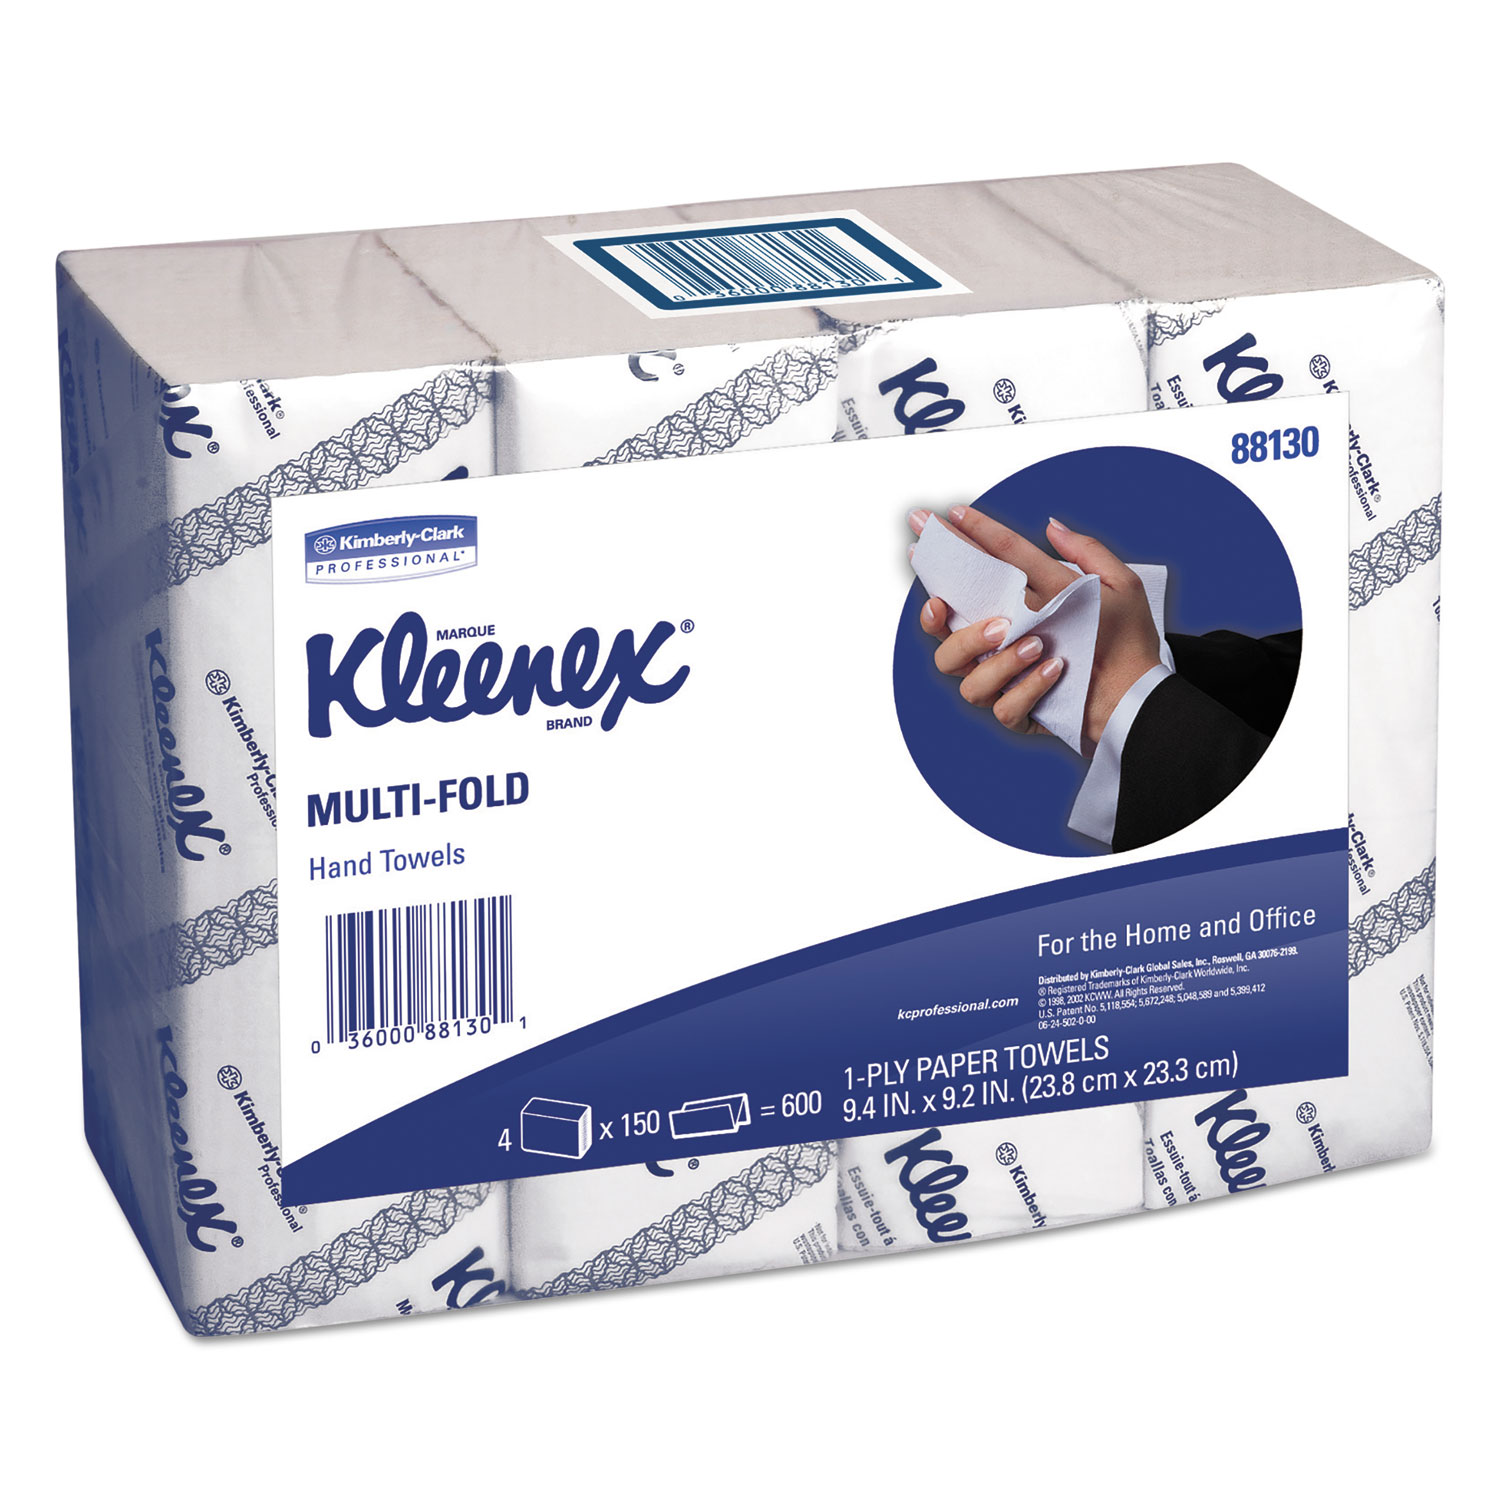  Kleenex 88130 Multi-Fold Paper Towels,(4) 4PK Bundles, 9 1/5x9 2/5, White, 150/Pack, 16/Carton (KCC88130) 